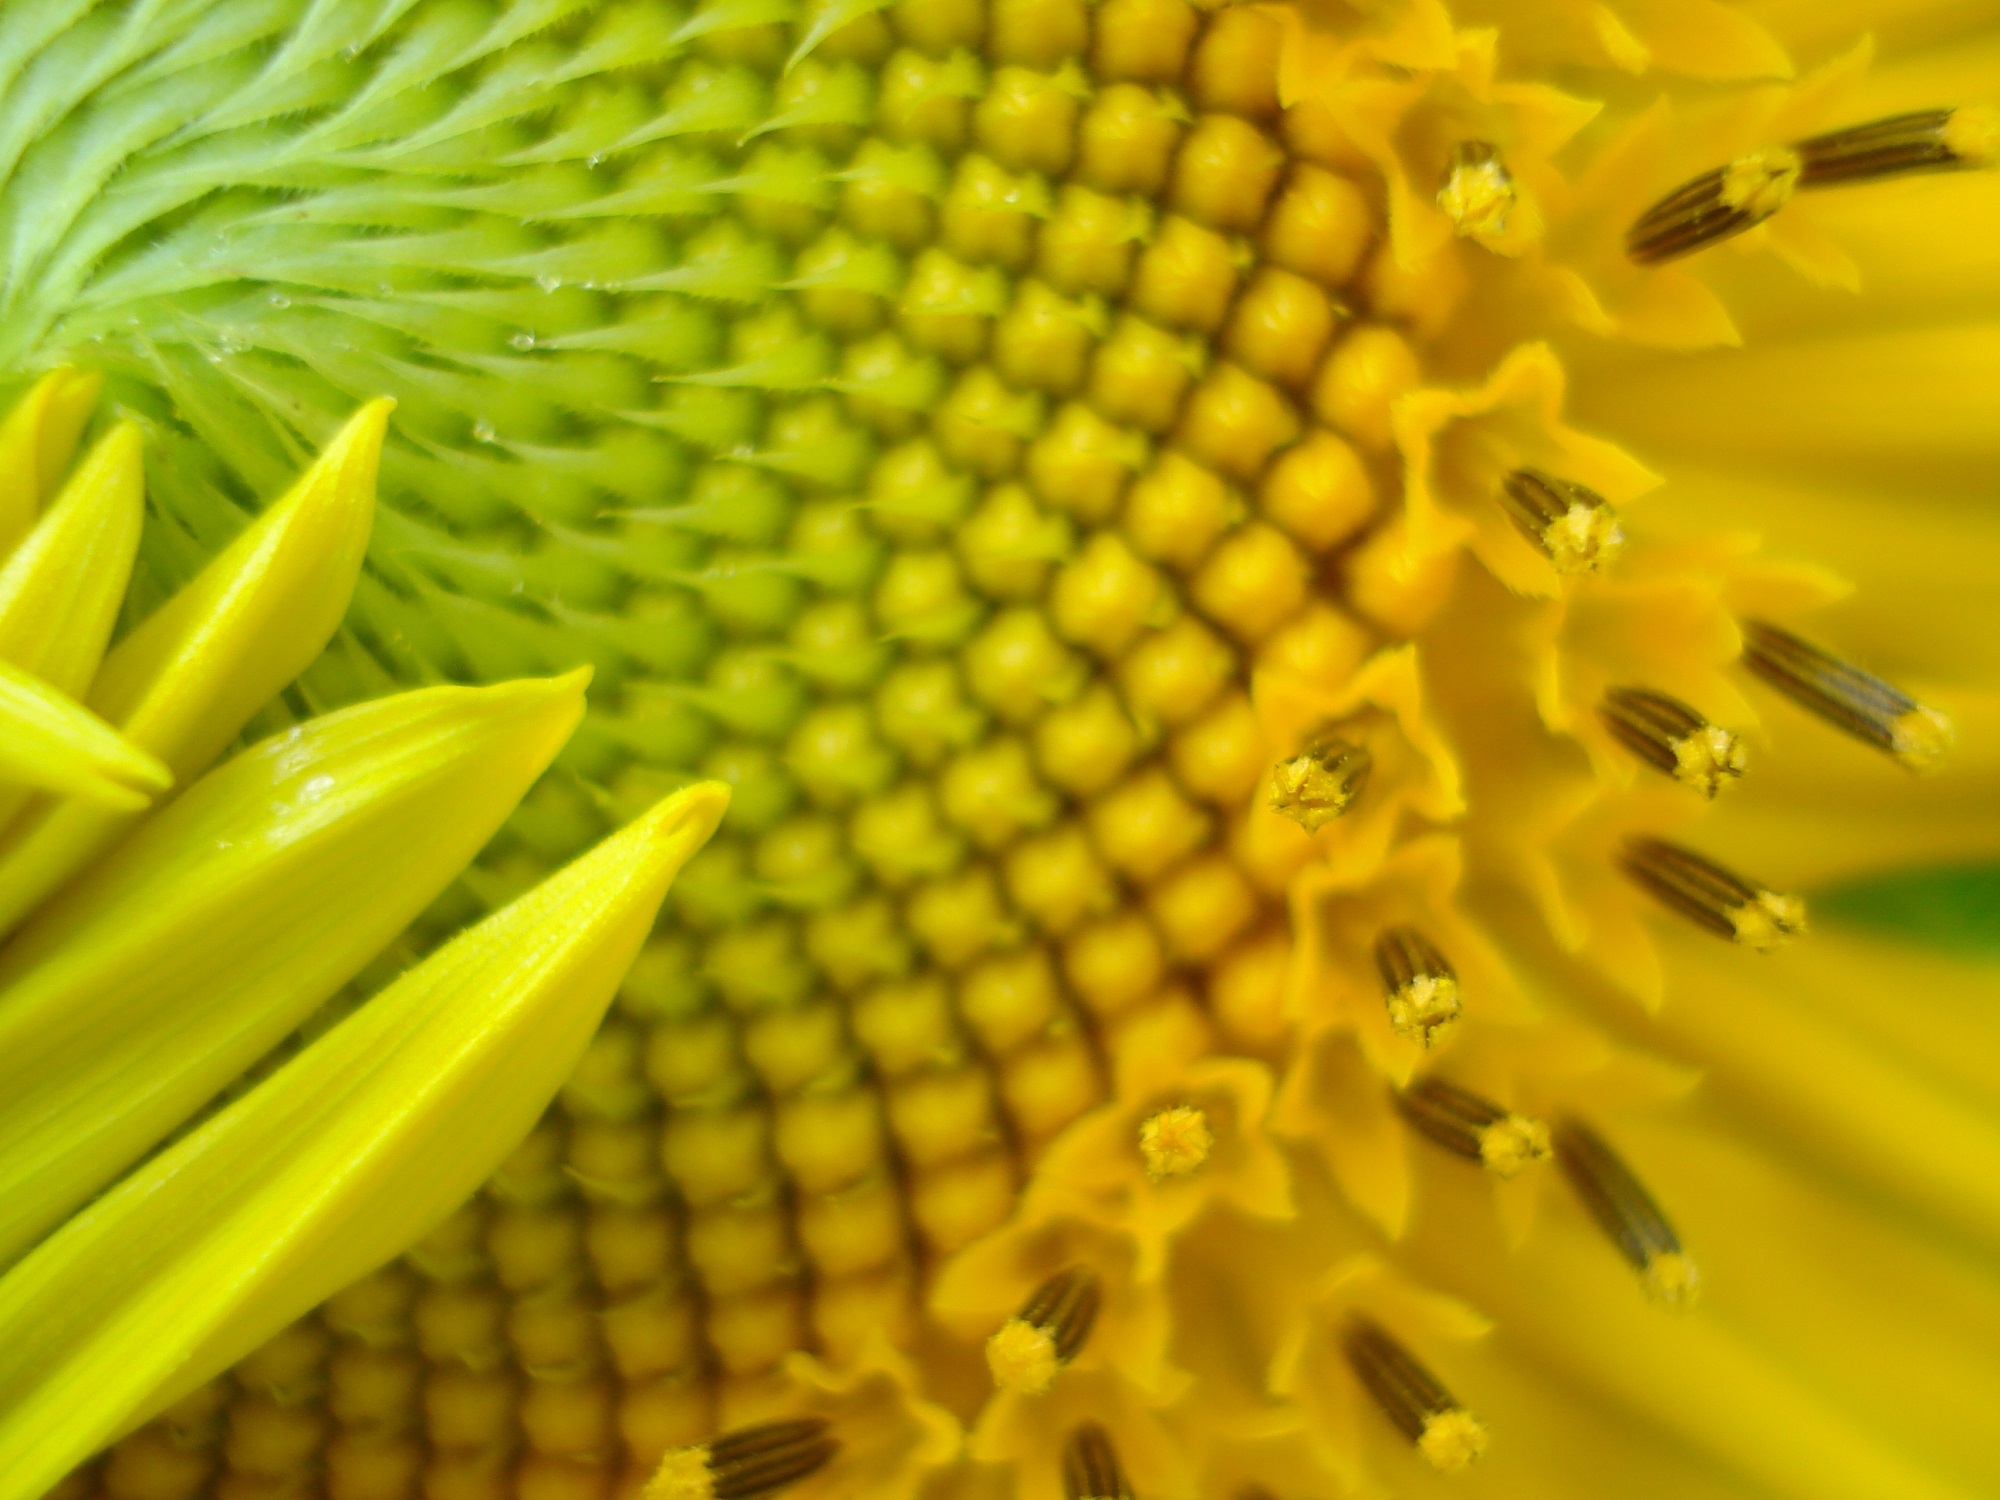 Sunflower closeup photo